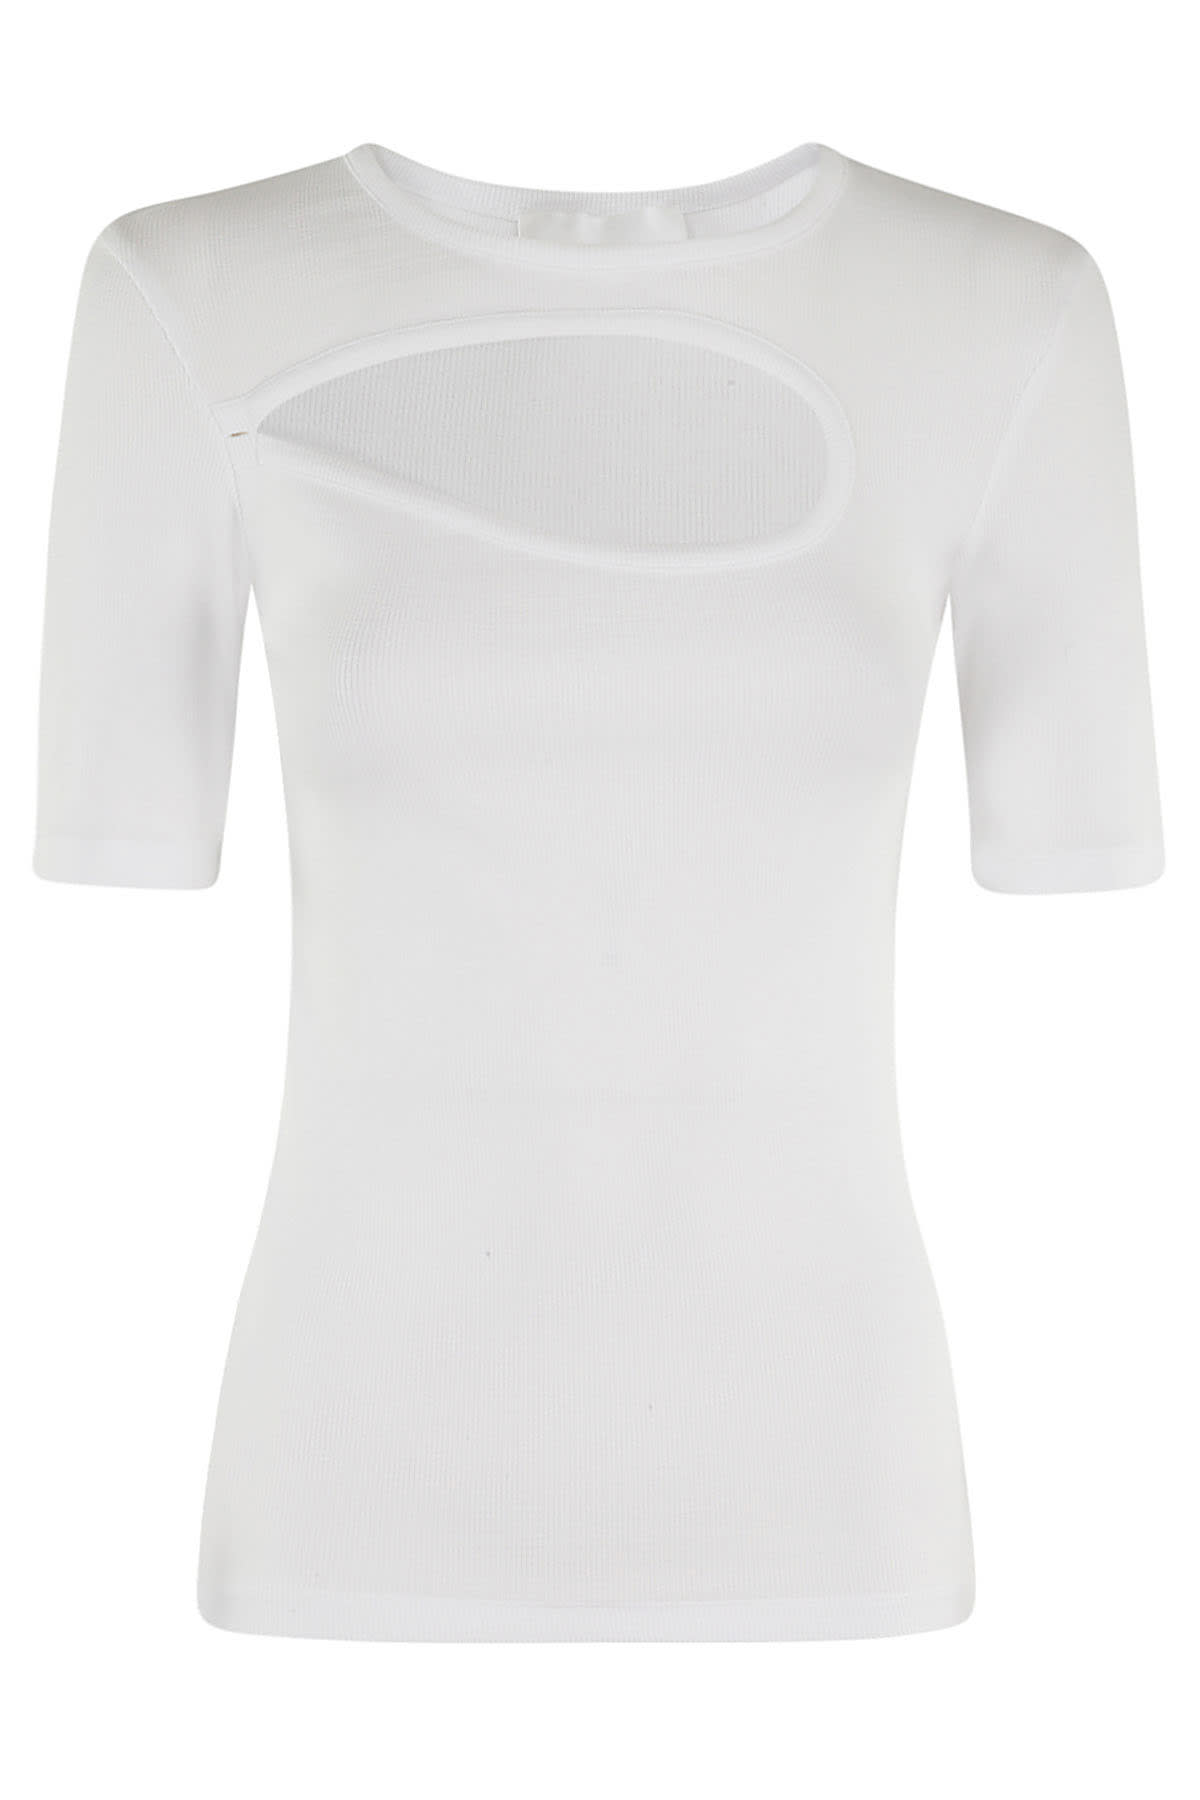 Remain Birger Christensen Jersey Short Sleeve T Shirt In White